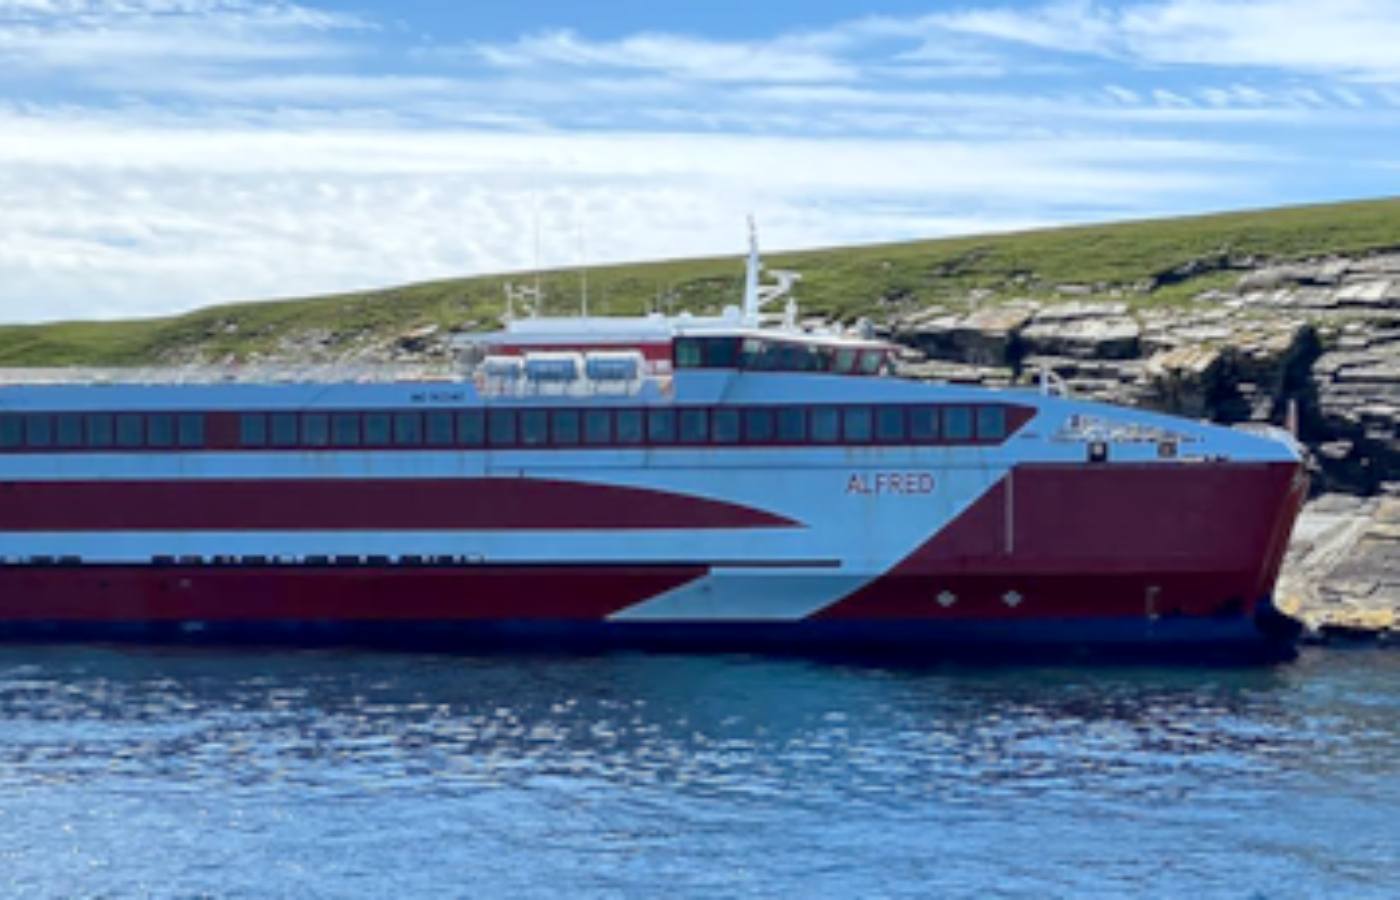 Passenger ferry MV Alfred grounded on the east coast of Swona Island, Pentland Firth, Scotland.